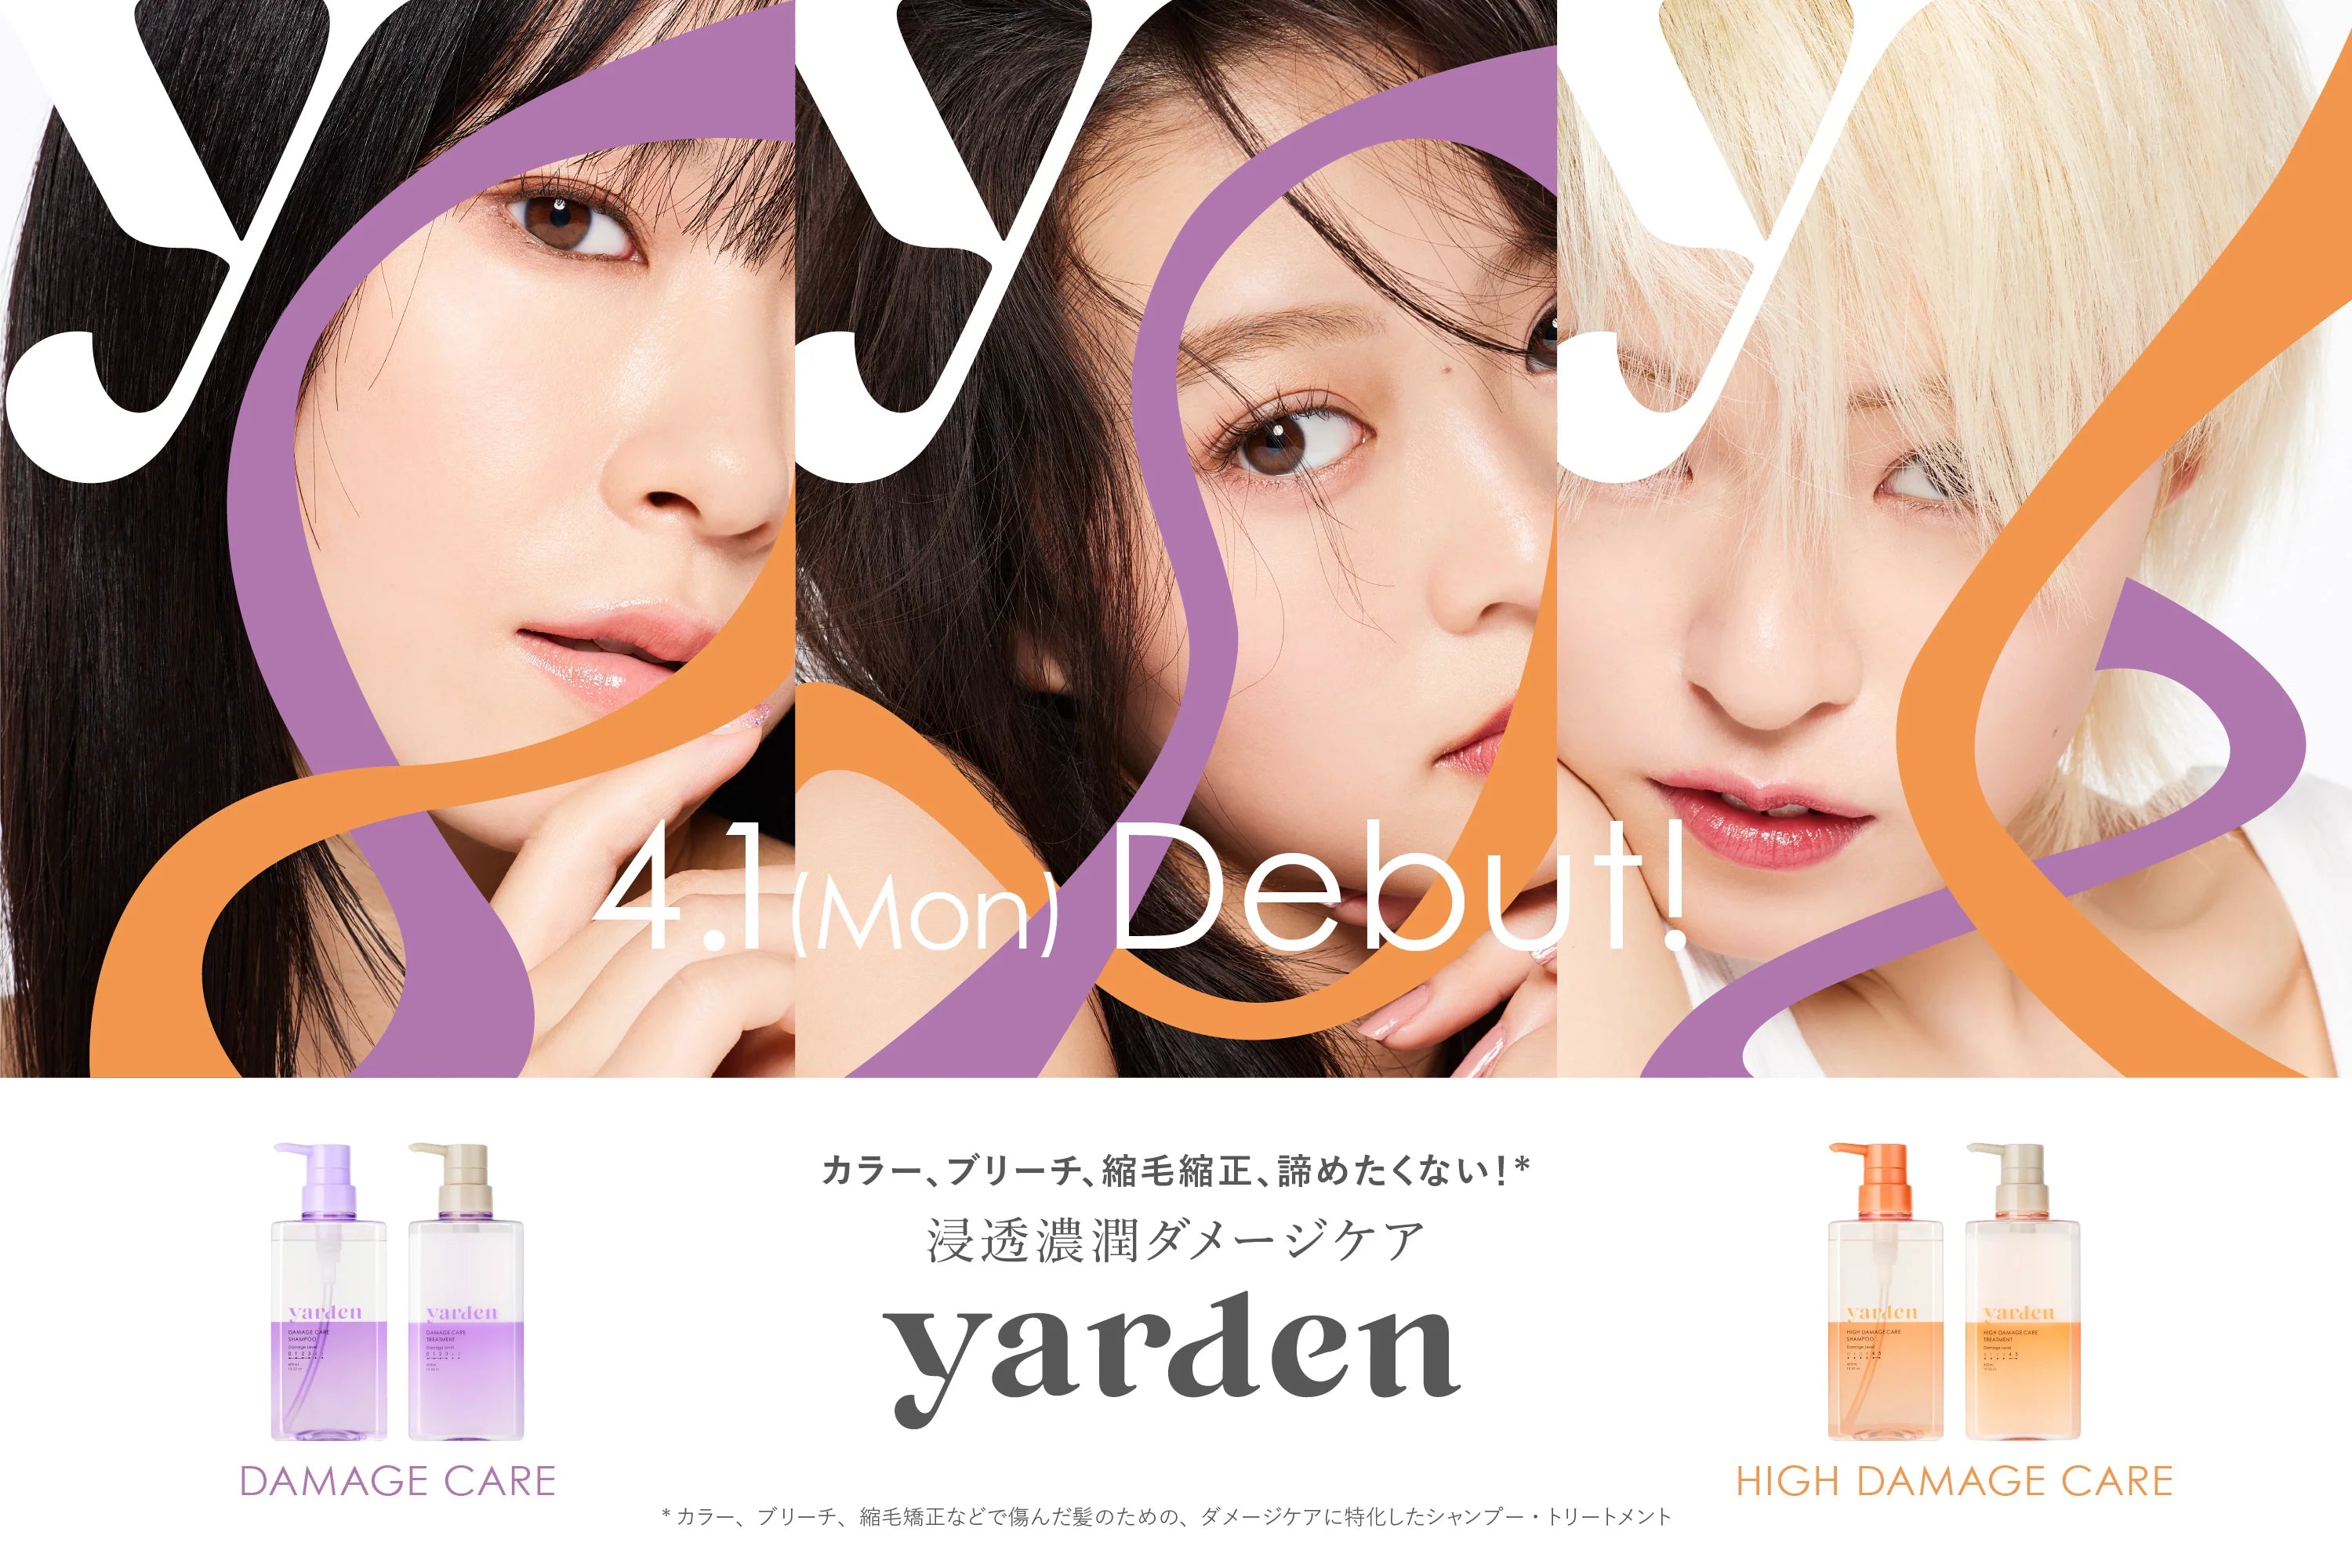 「Yarden(ヤーデン)」フルリニューアル! 髪のダメージレベルで選ぶ、ダメージ補修特化シャンプー&トリートメント発売！